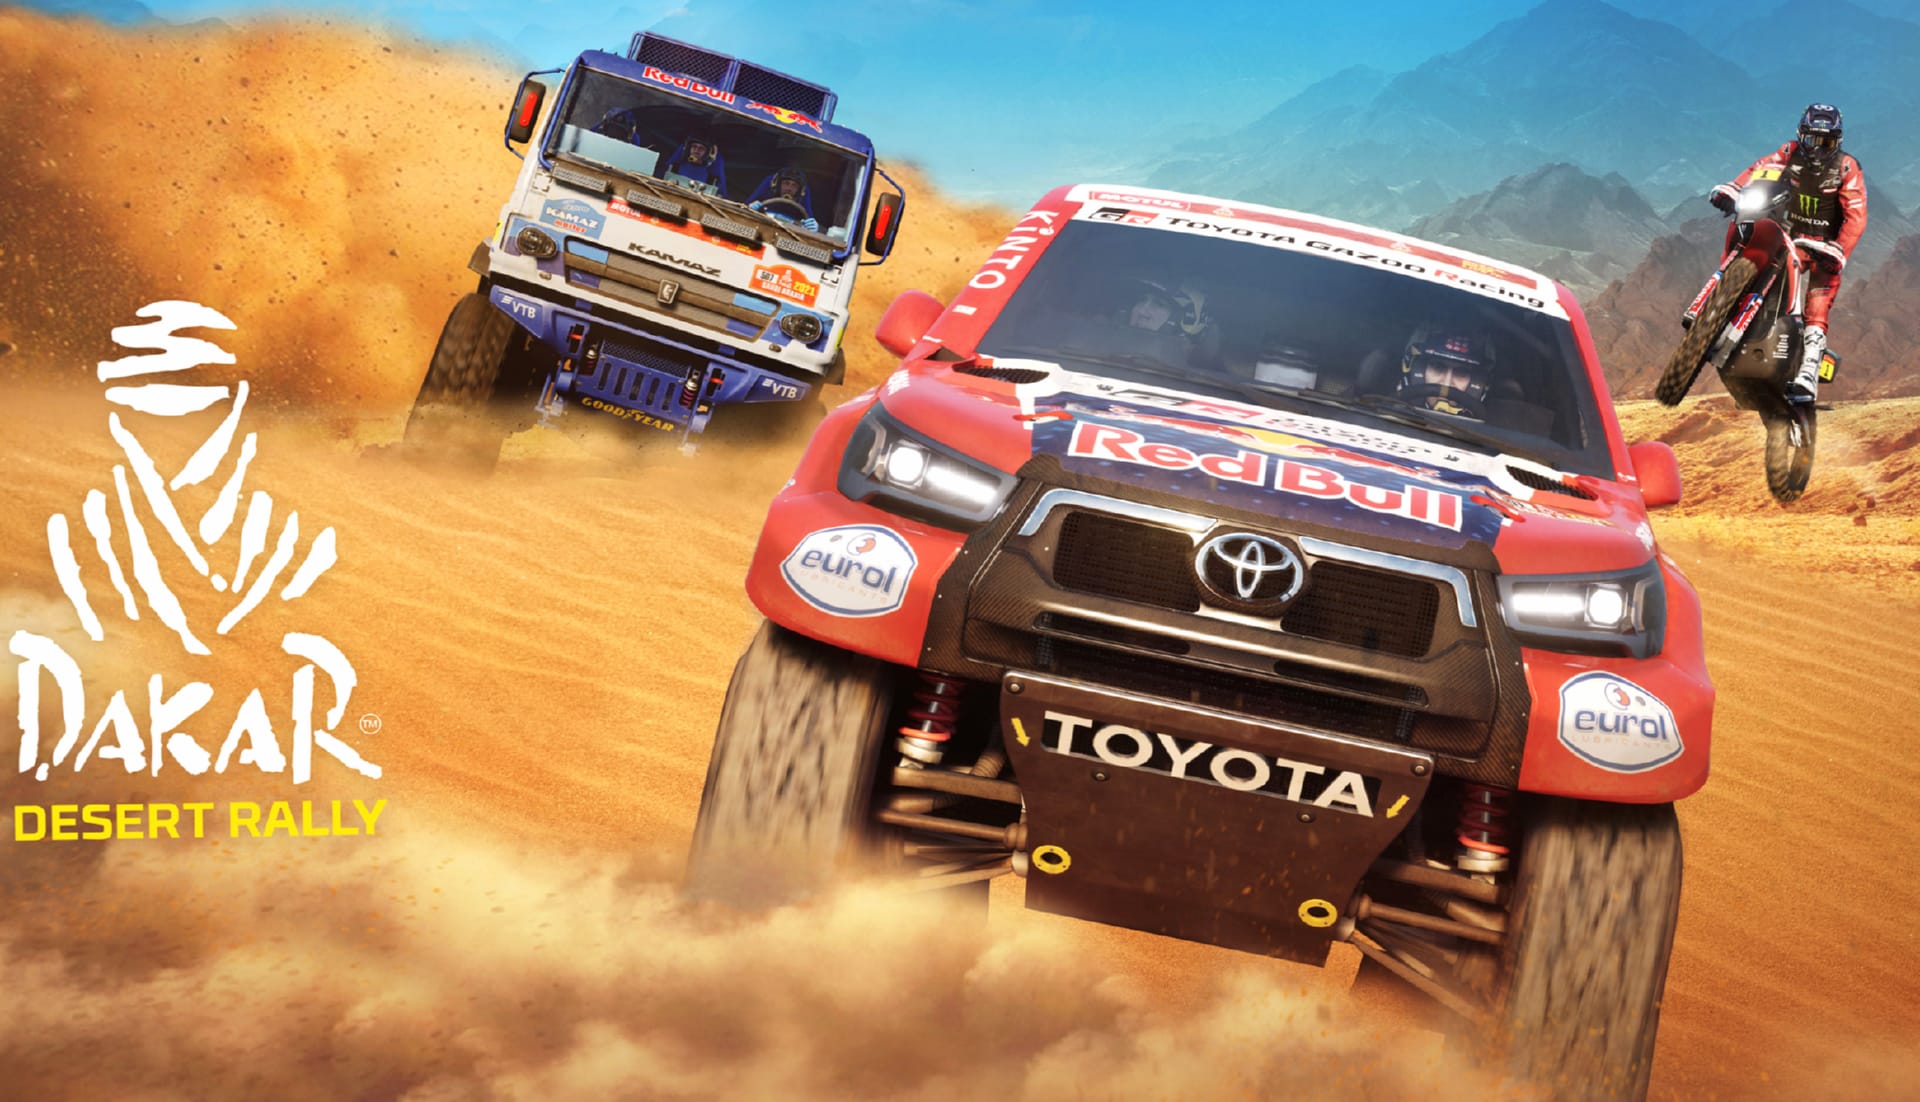 Dakar Desert Rally at 750 x 1334 iPhone 6 size wallpapers HD quality